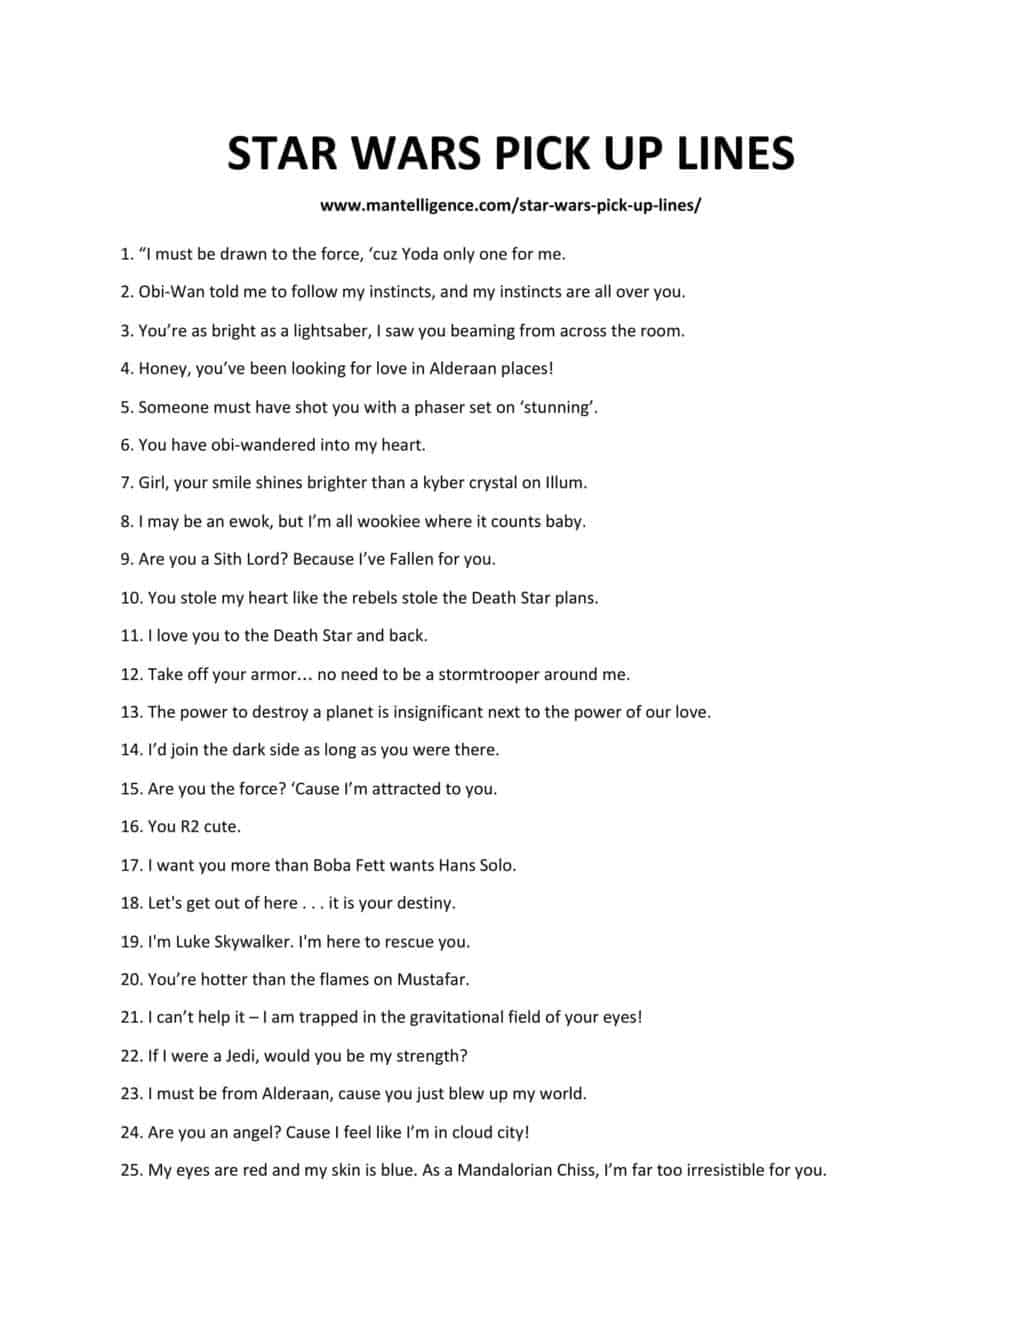 Más de 41 diálogos de Star Wars que son divertidos para R2